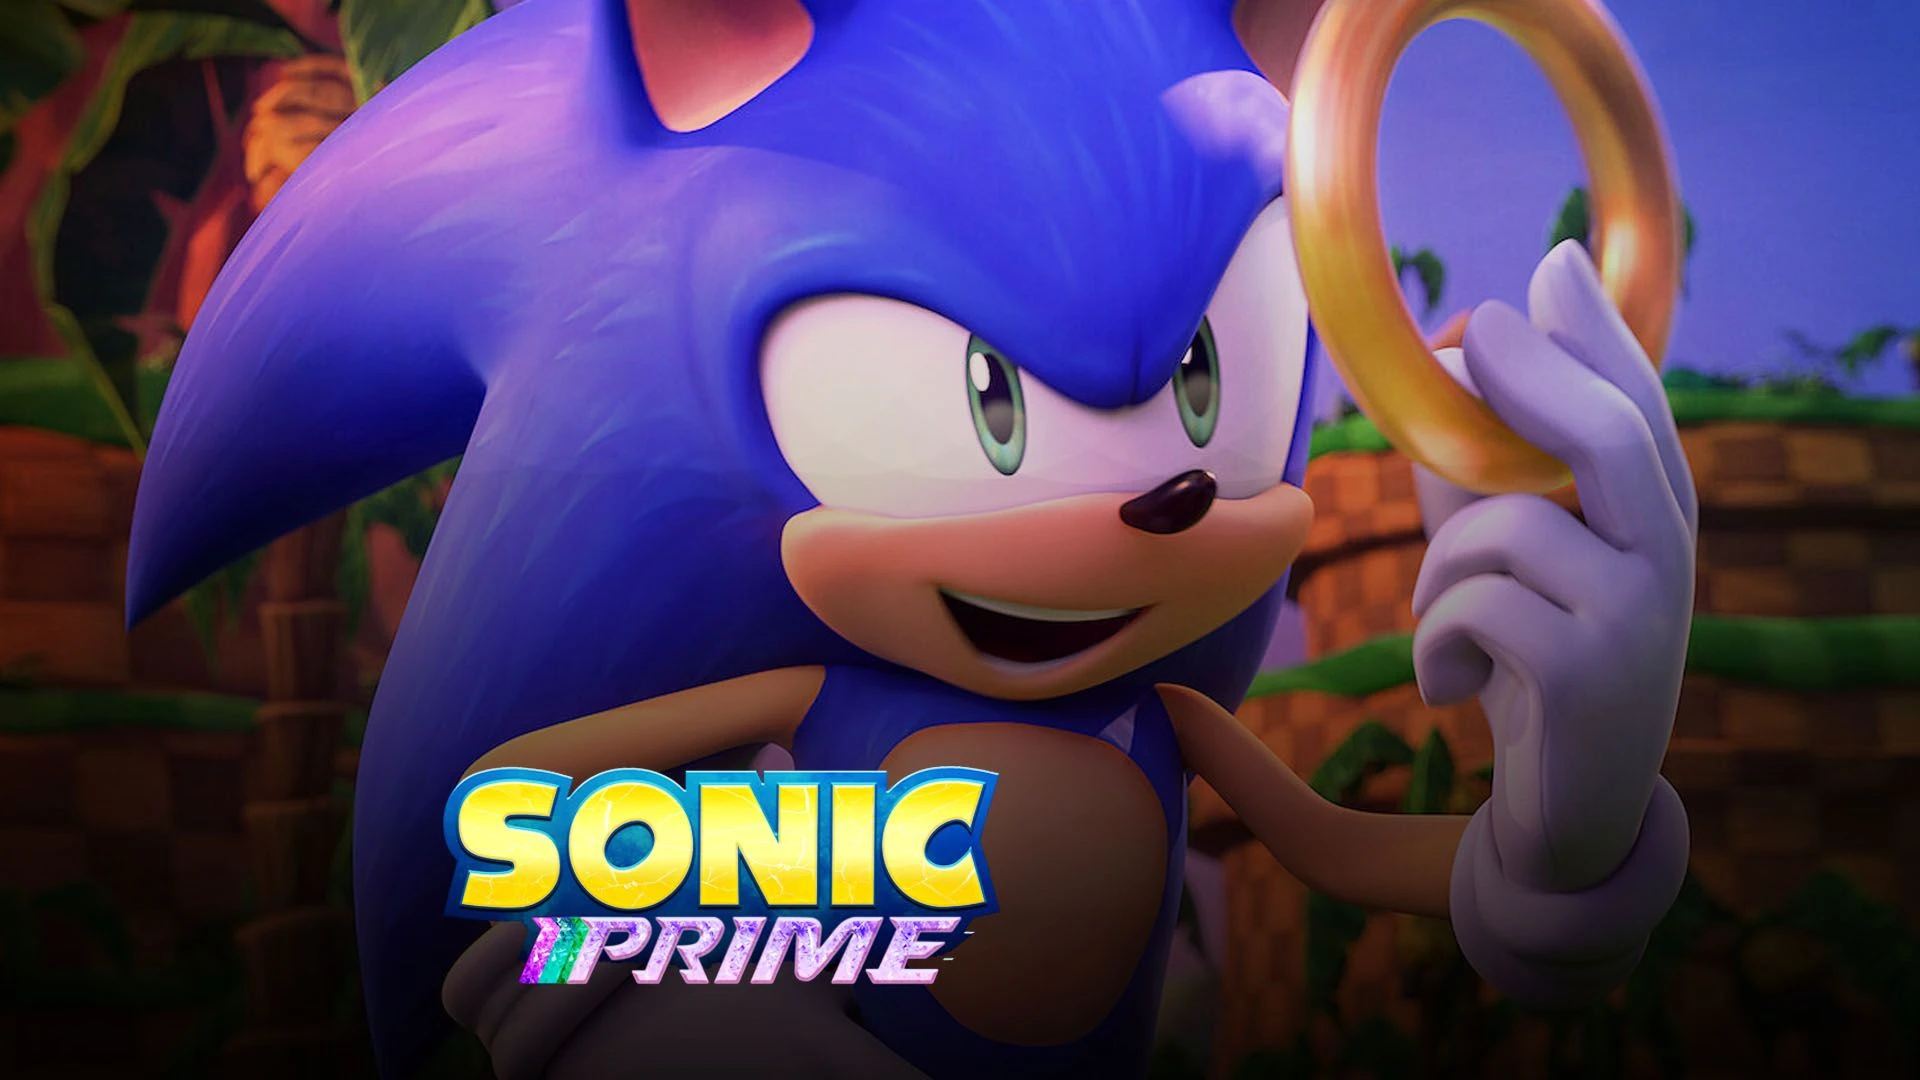 Sonic Prime Parents Guide (2)